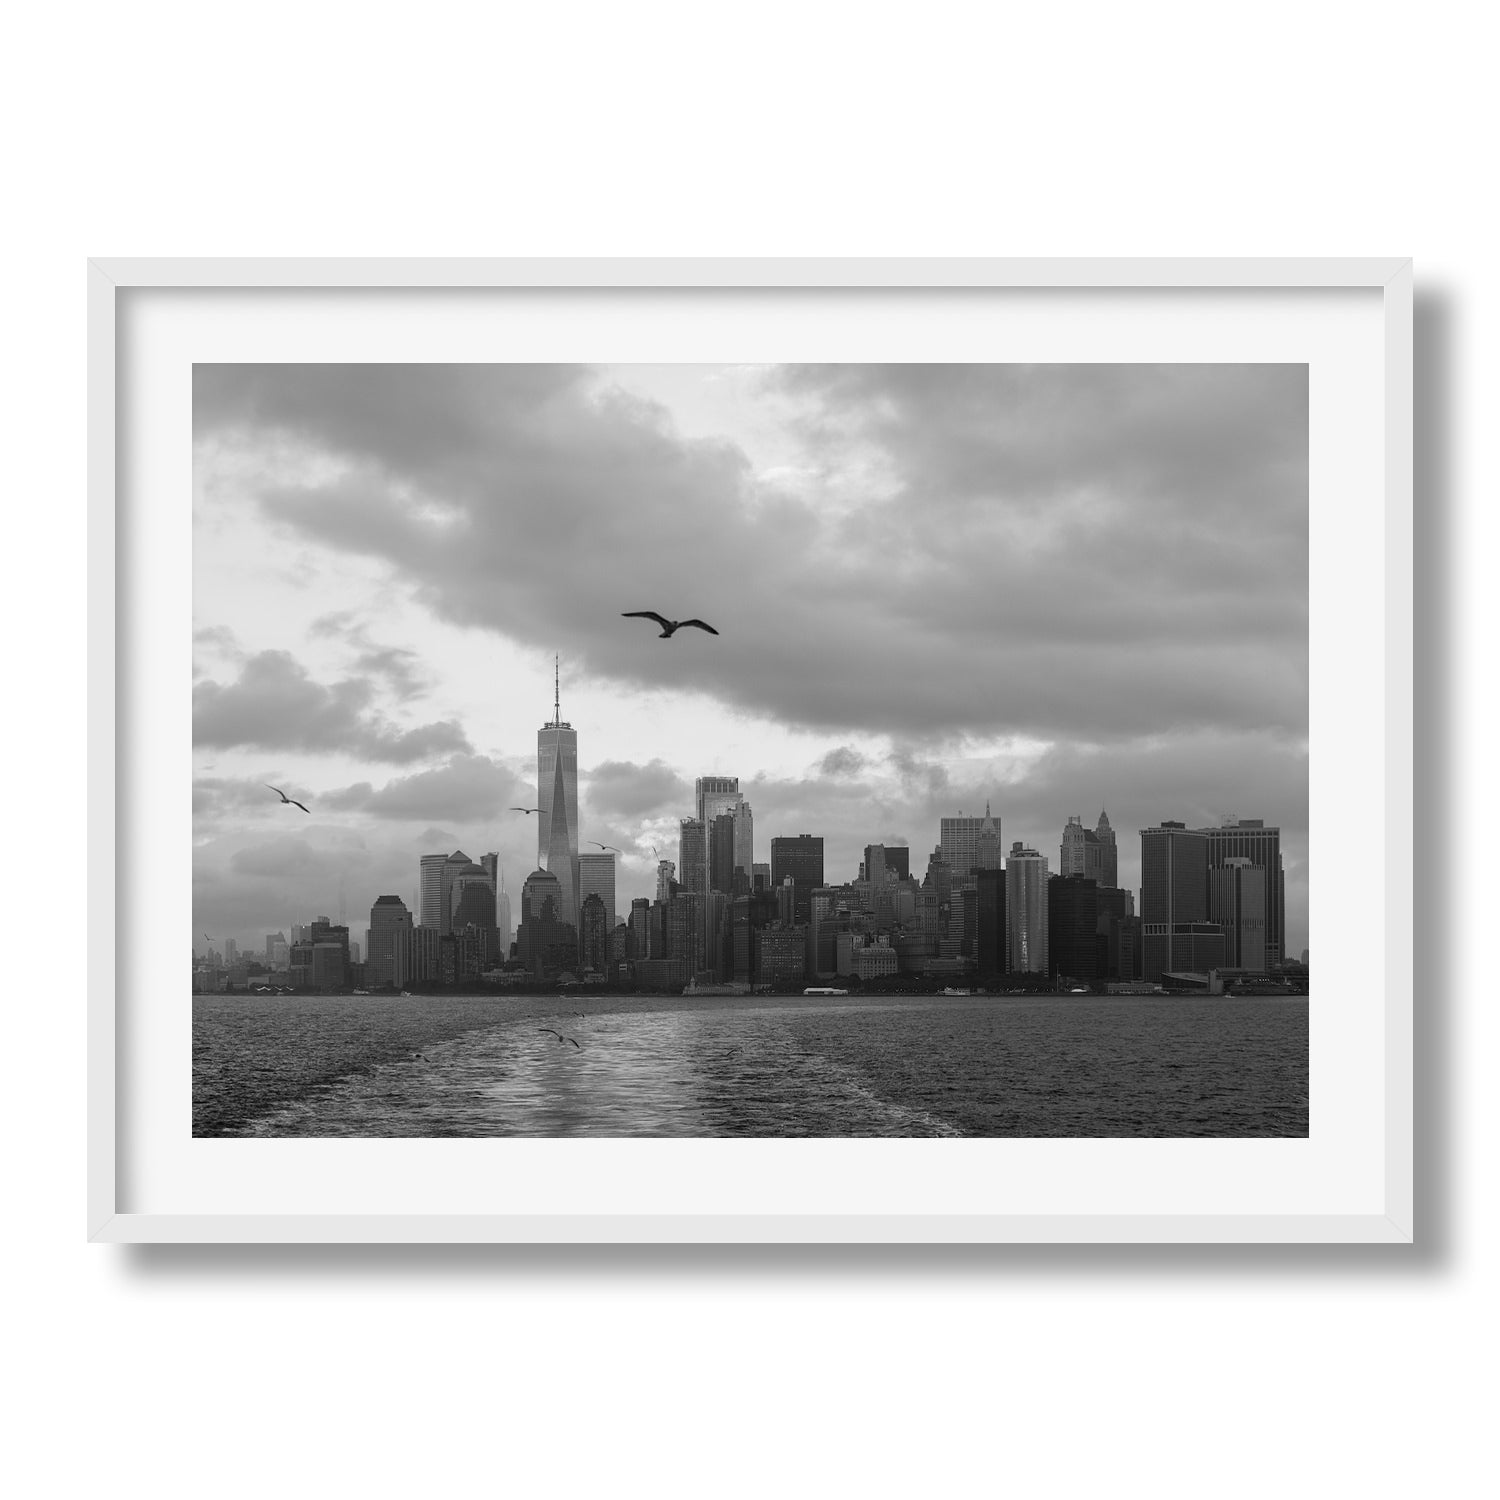 New York City from Hudson River in Black & White - Peter Yan Studio